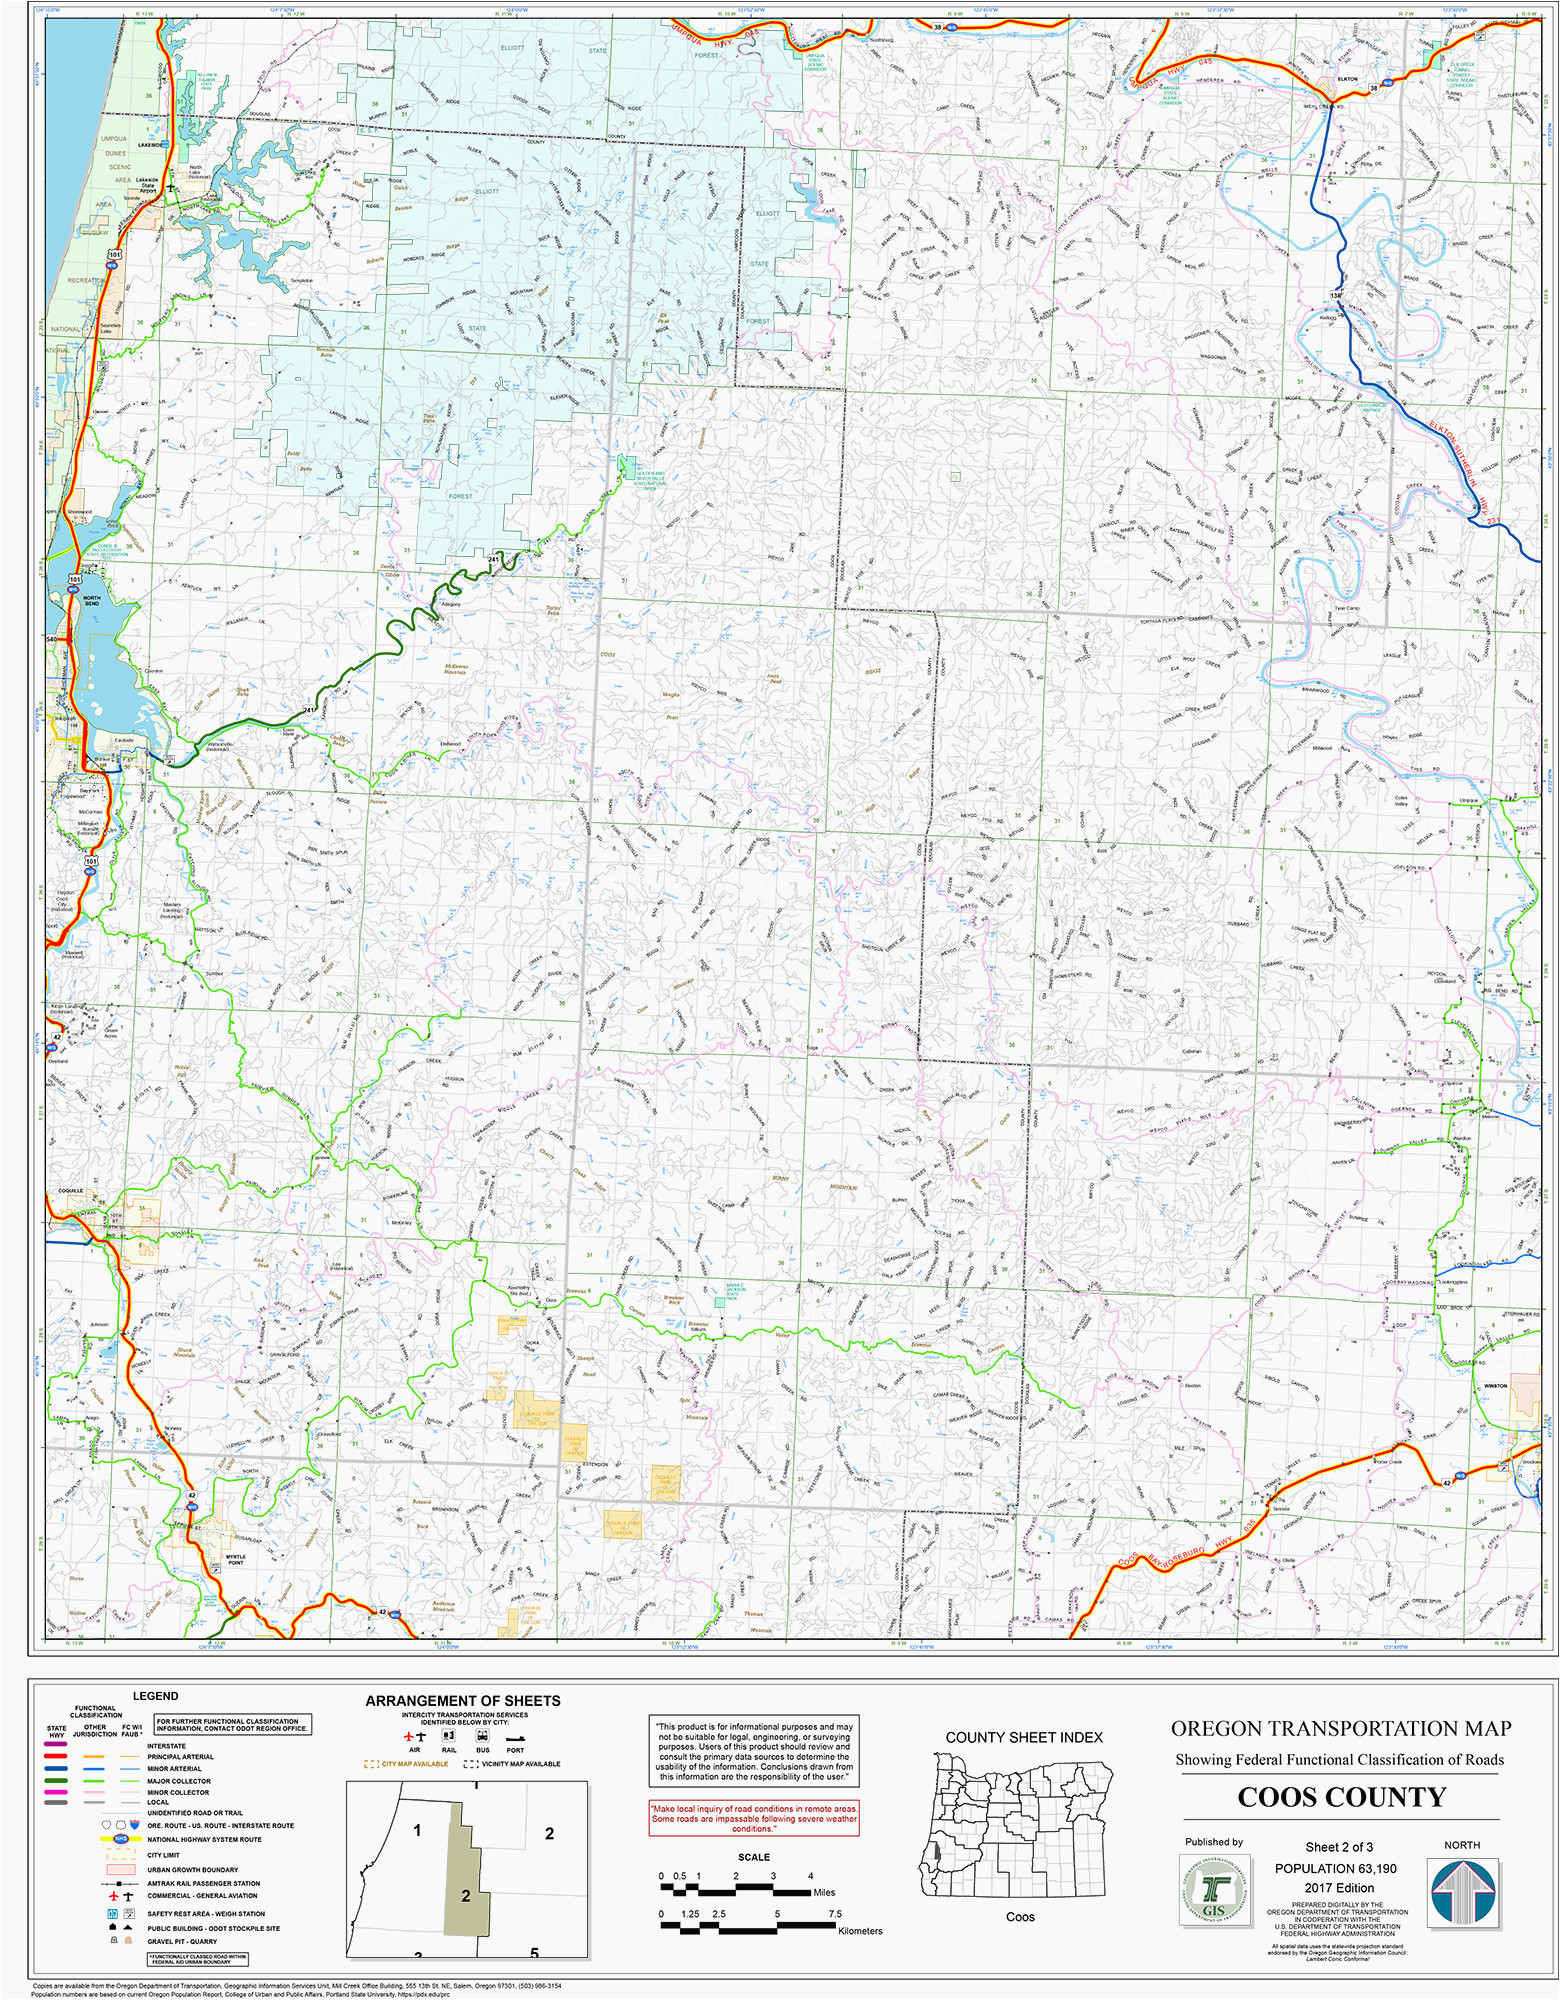 Minnesota Road Maps oregon forest Service Road Maps Secretmuseum